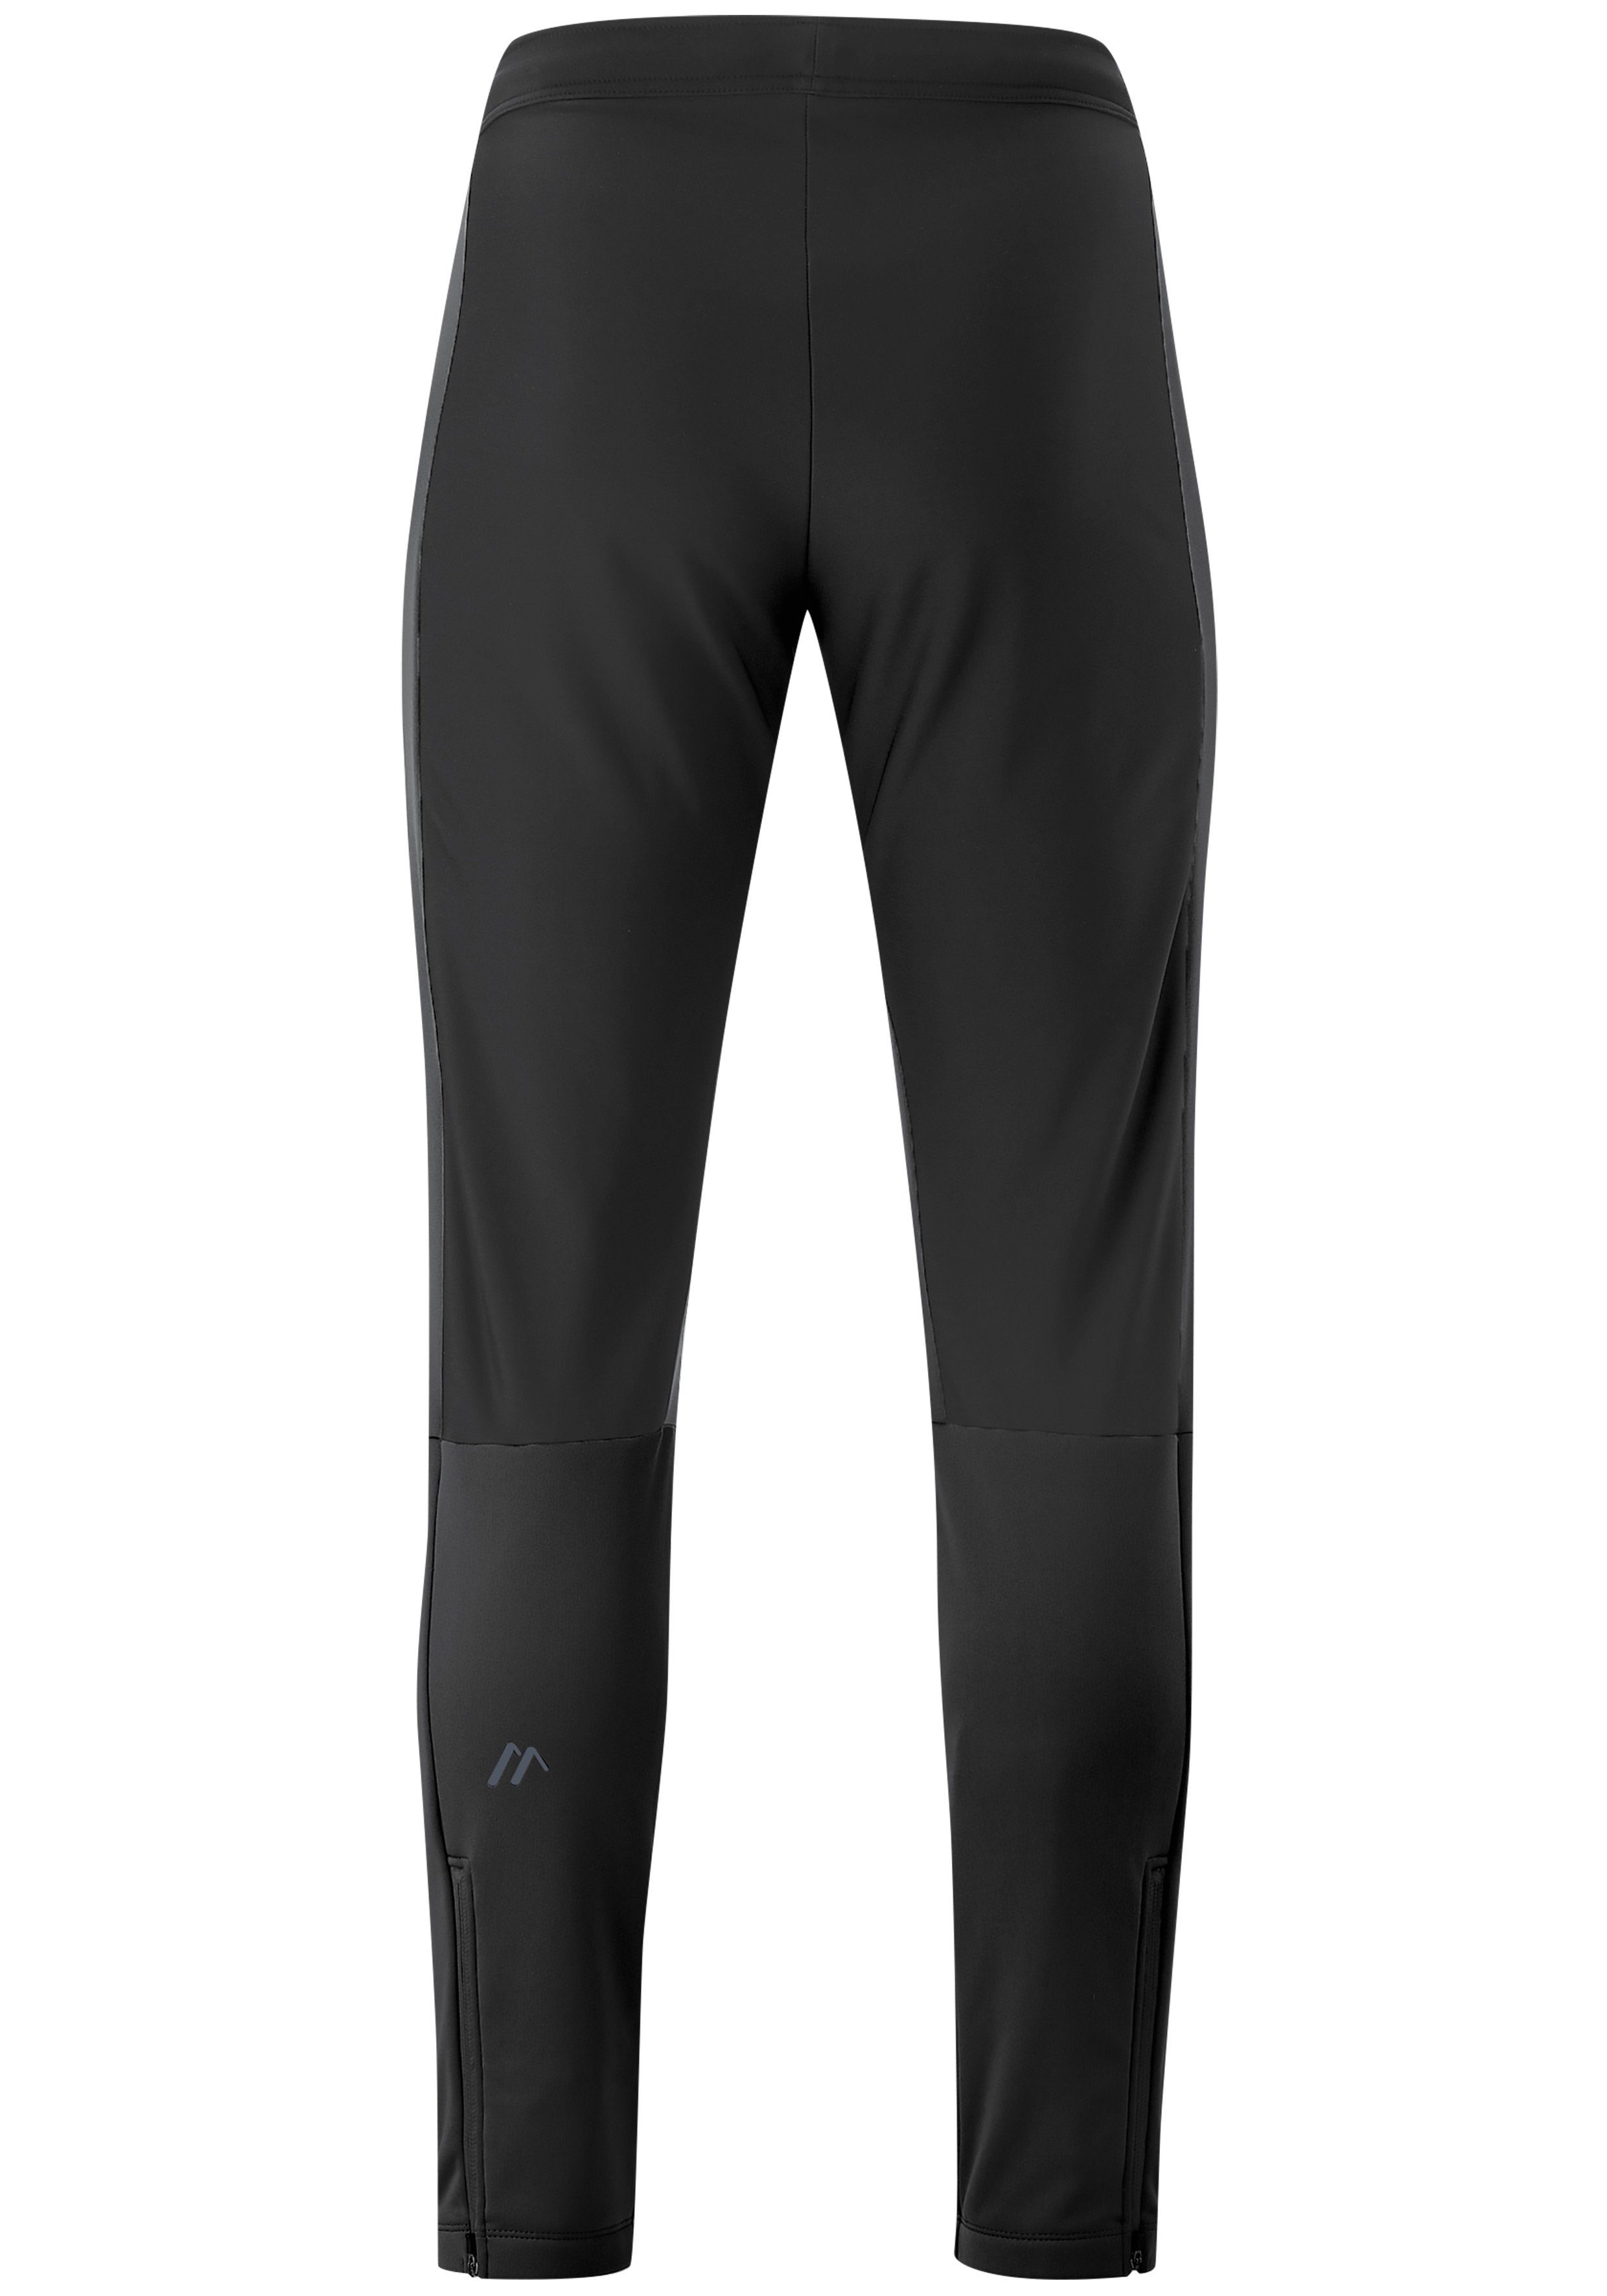 Maier Sports Softshellhose Softshell-Hose Schnitt dunkelgrau in Pants modernen Malselv komfortable M Slim-Fit